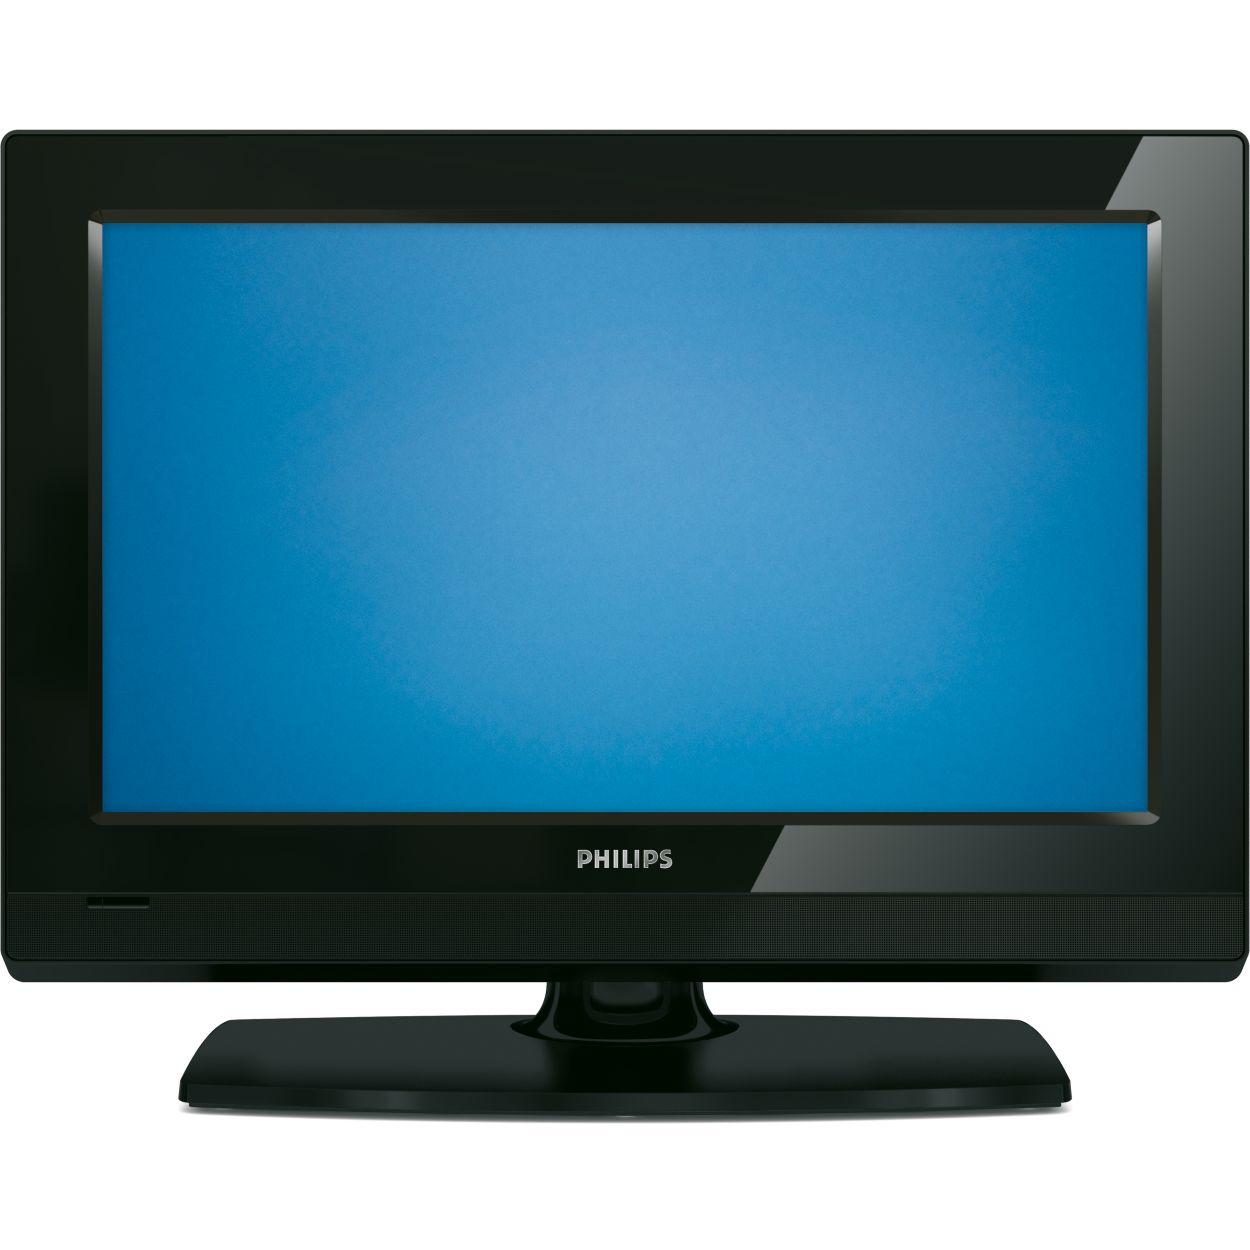 Филипс черный экран. Philips 32pfl3312s. Телевизор Philips 32pfl3312s. Телевизор Philips 32pfl3312s 32". 32pfl3312s/60.